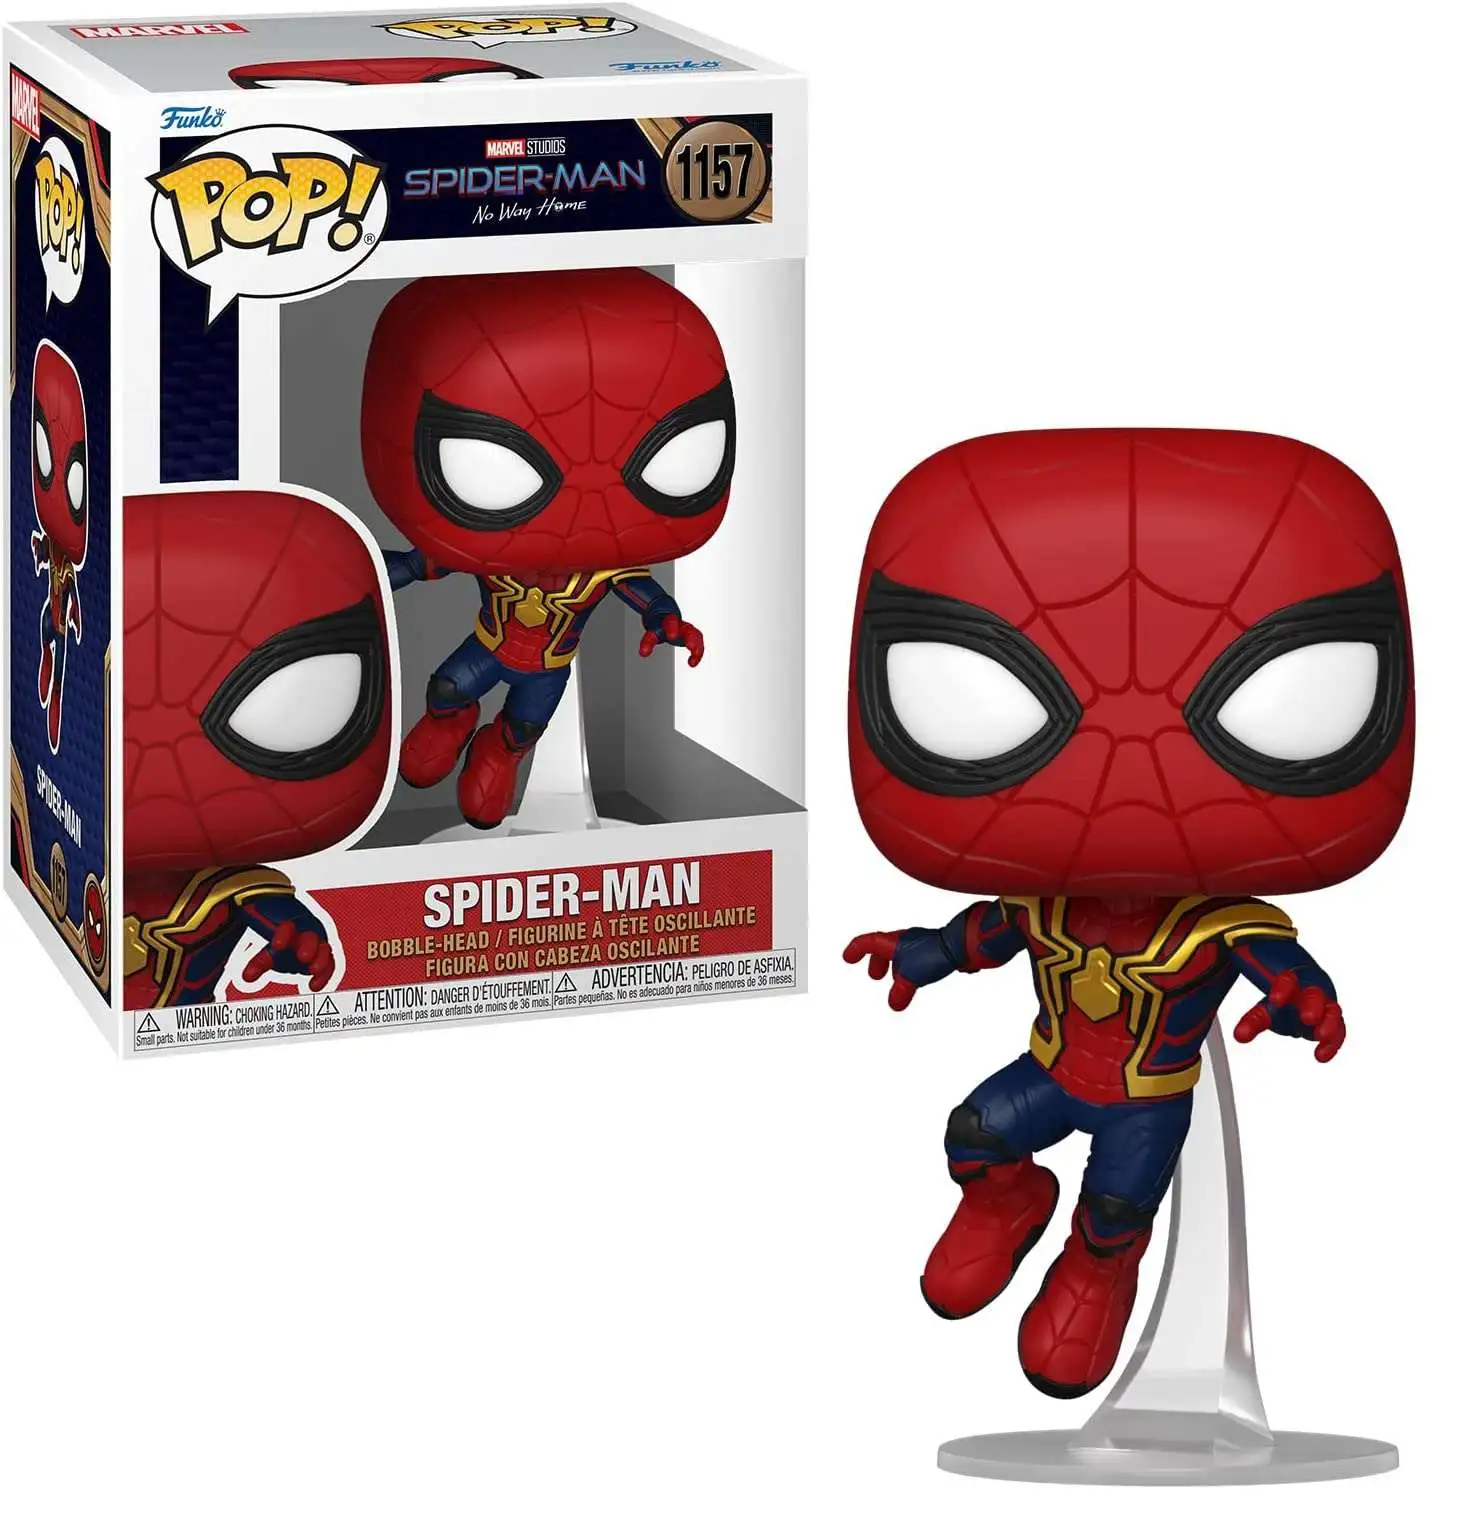 Funko Pocket POP! Spider-Man: No Way Home Leaping Spider-Man 4-in